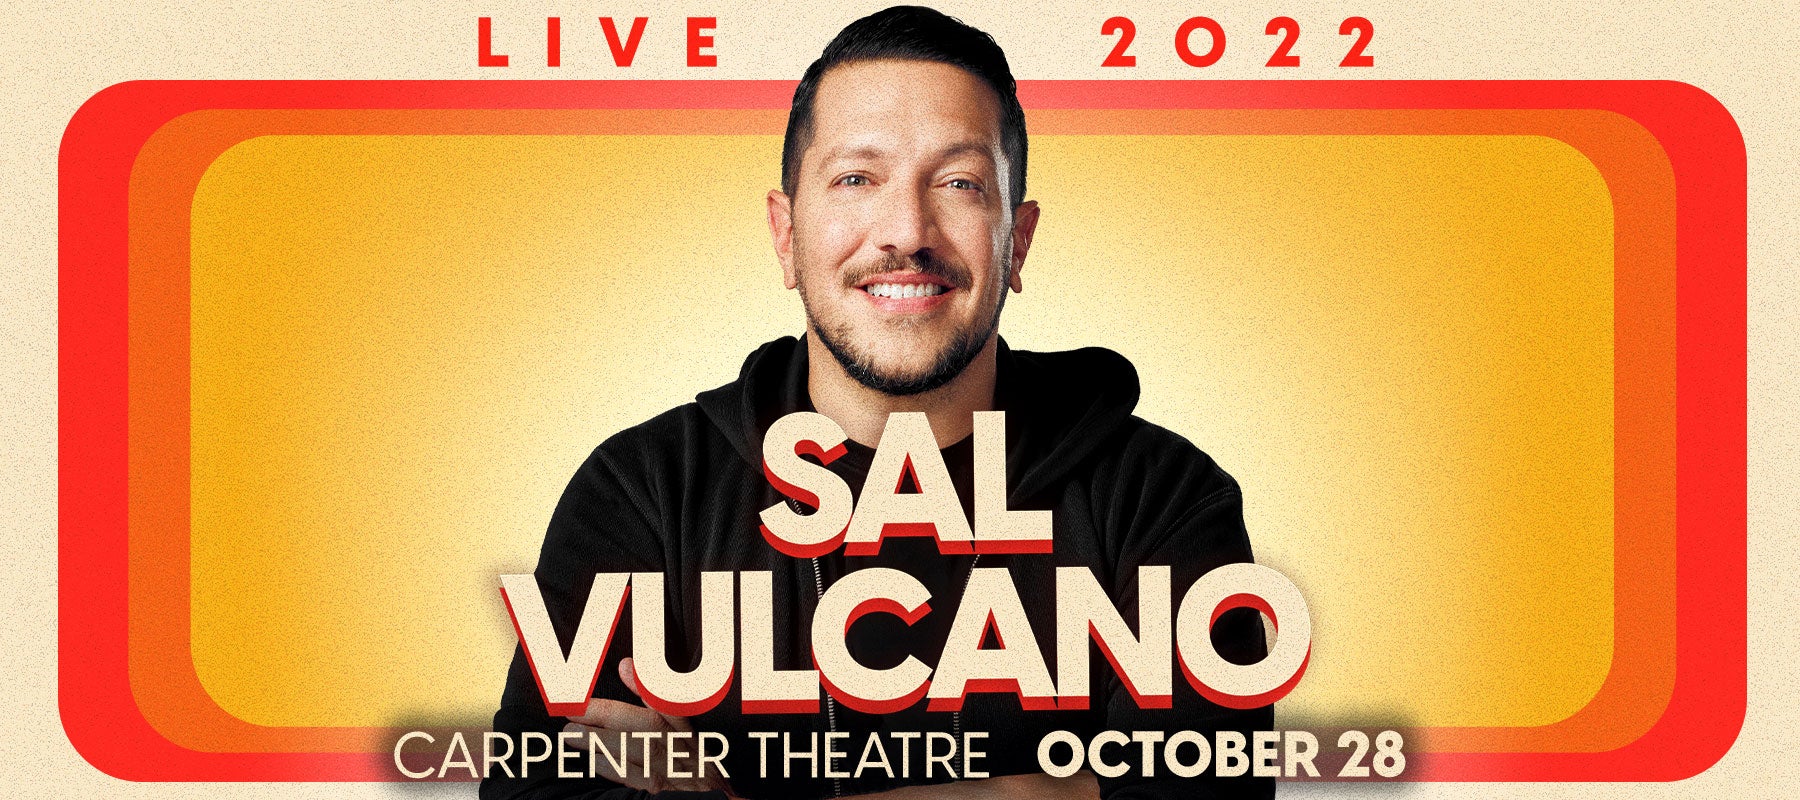 sal vulcano tour dates